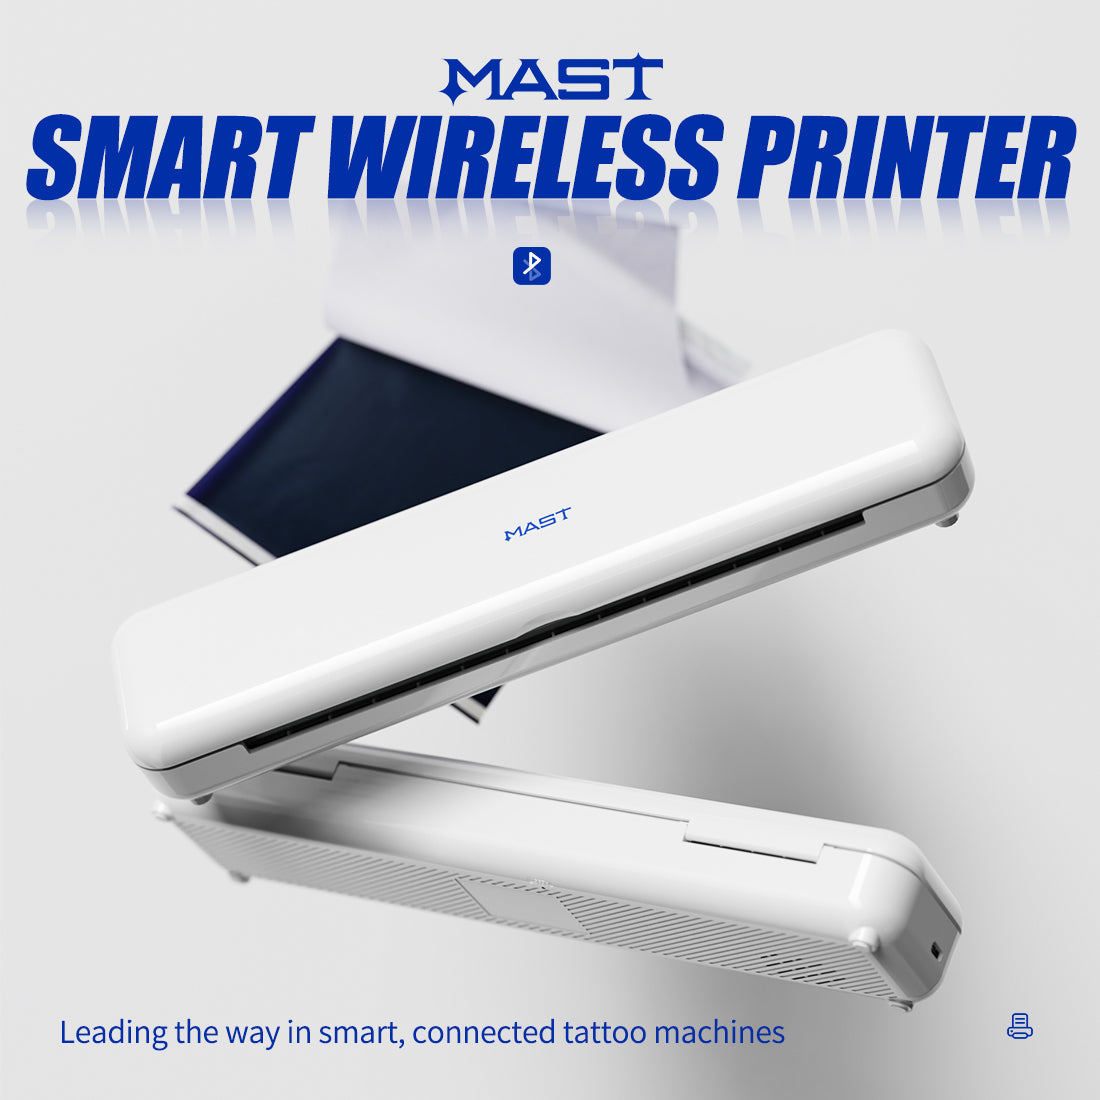 MAST Smart Wireless Printer